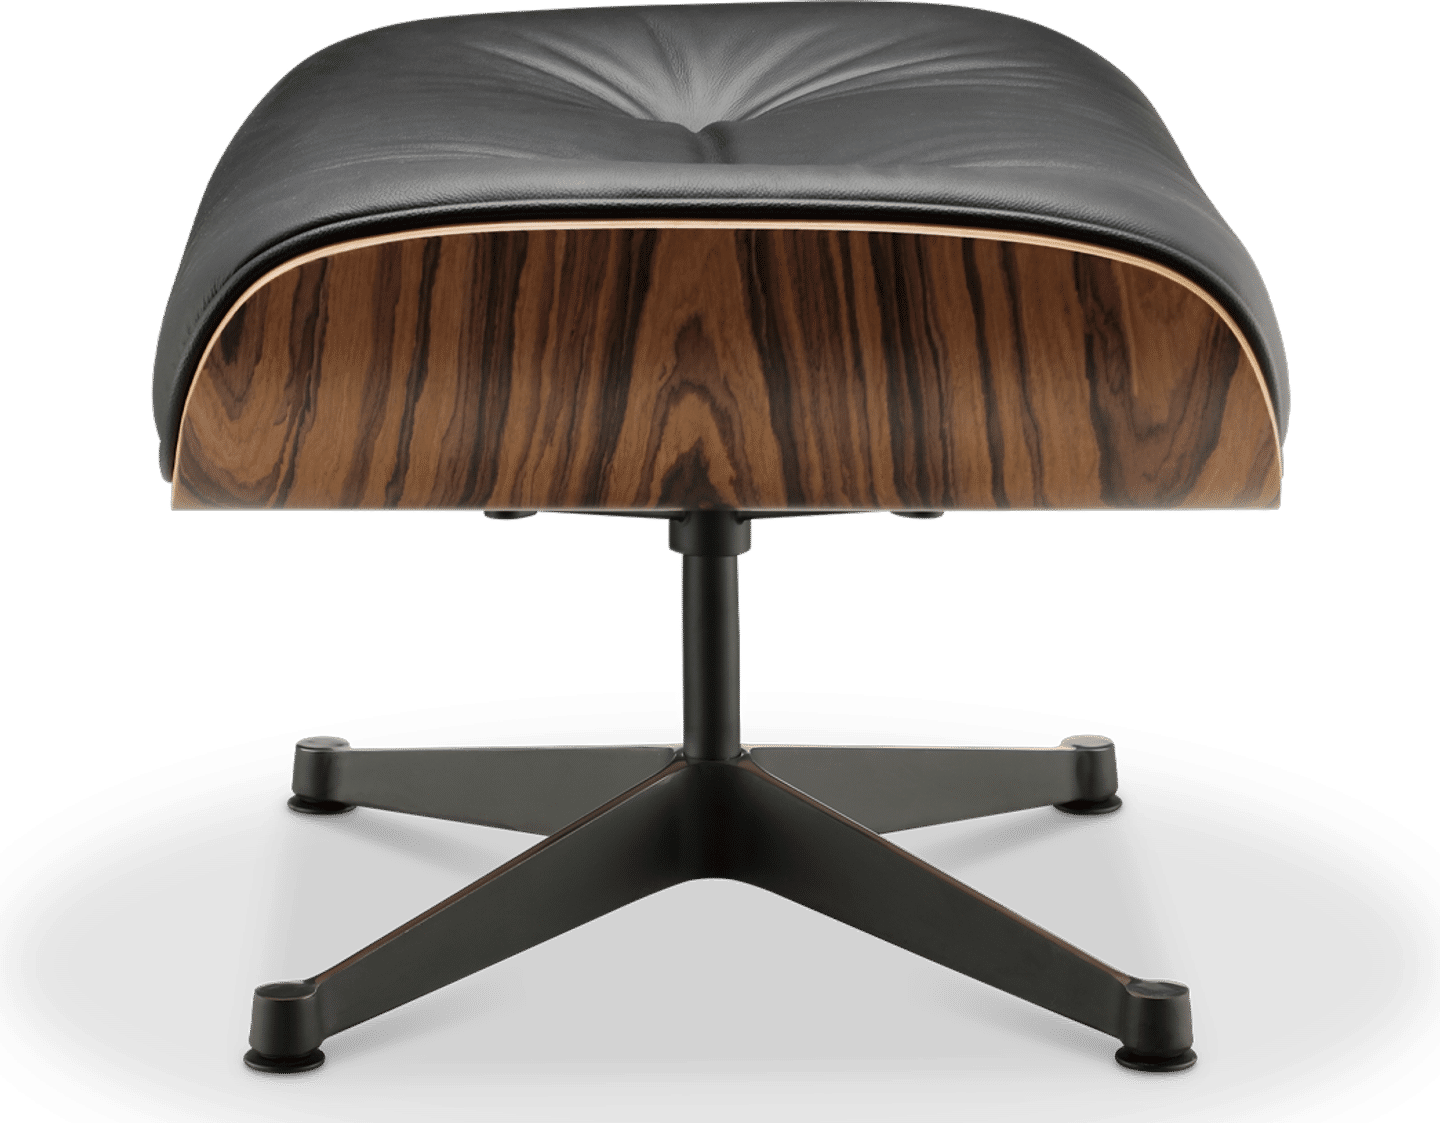 Eames Style Lounge Chair 670 Taburete Italian Leather/Black/Rosewood image.